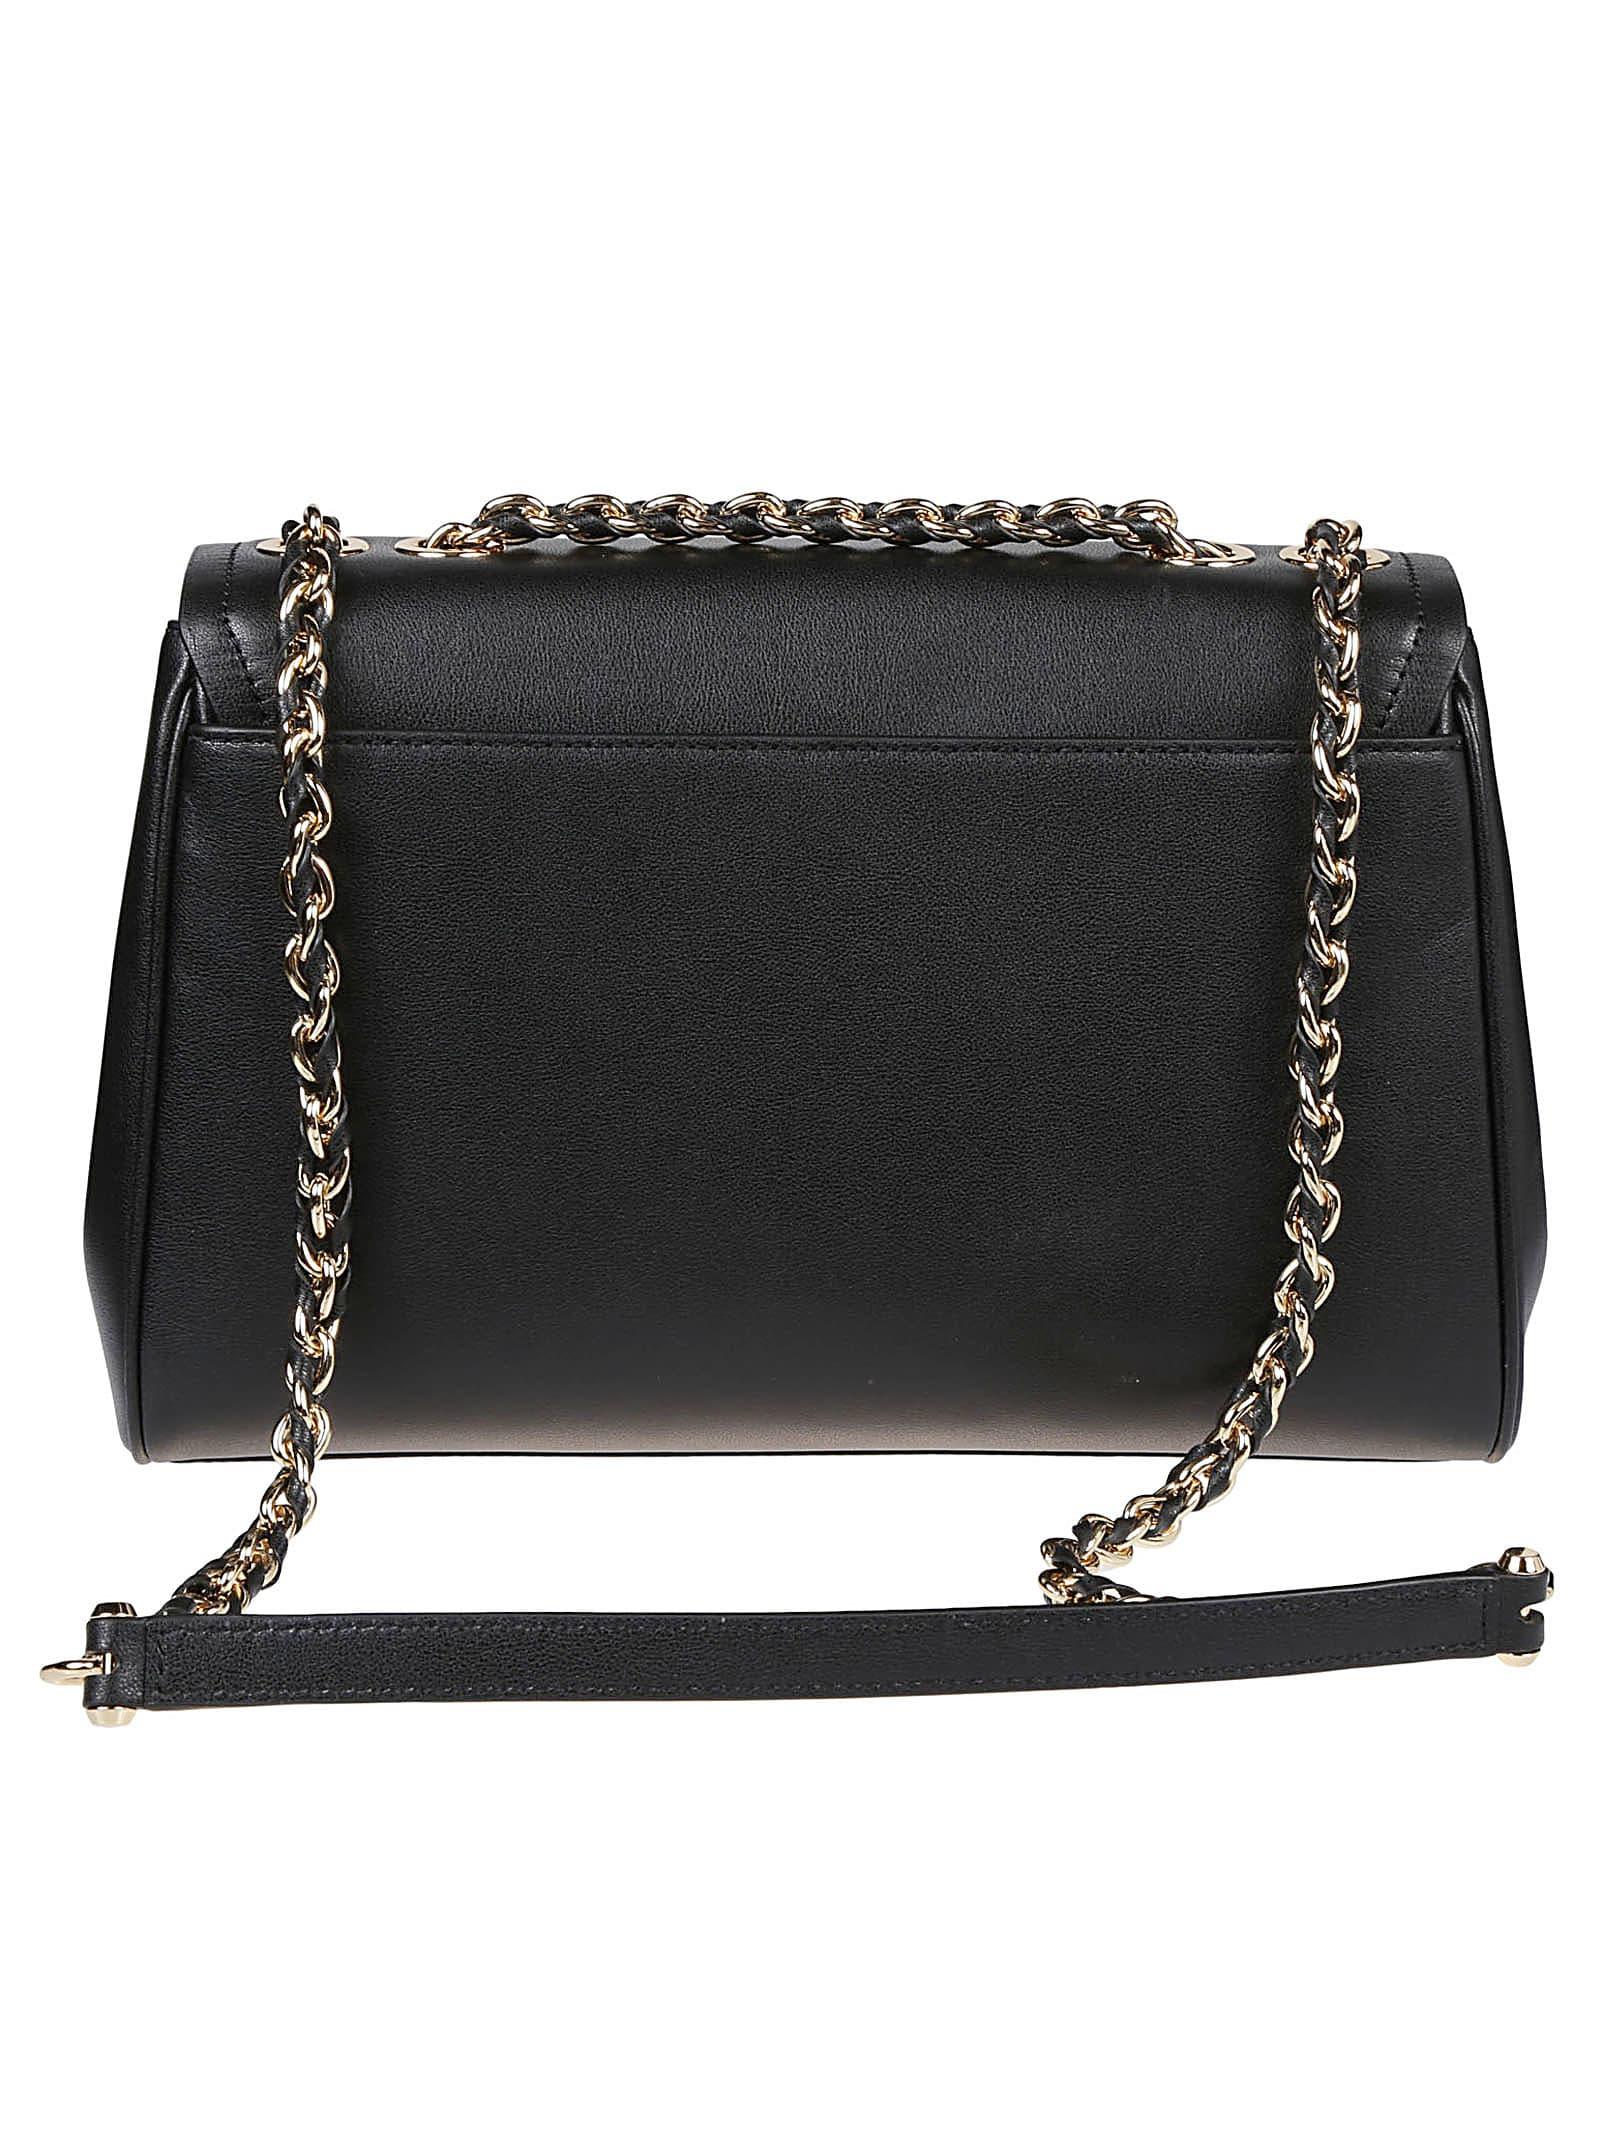 Michael kors Black Leather handbag with an extra floral shoulder strap,RRP  $498